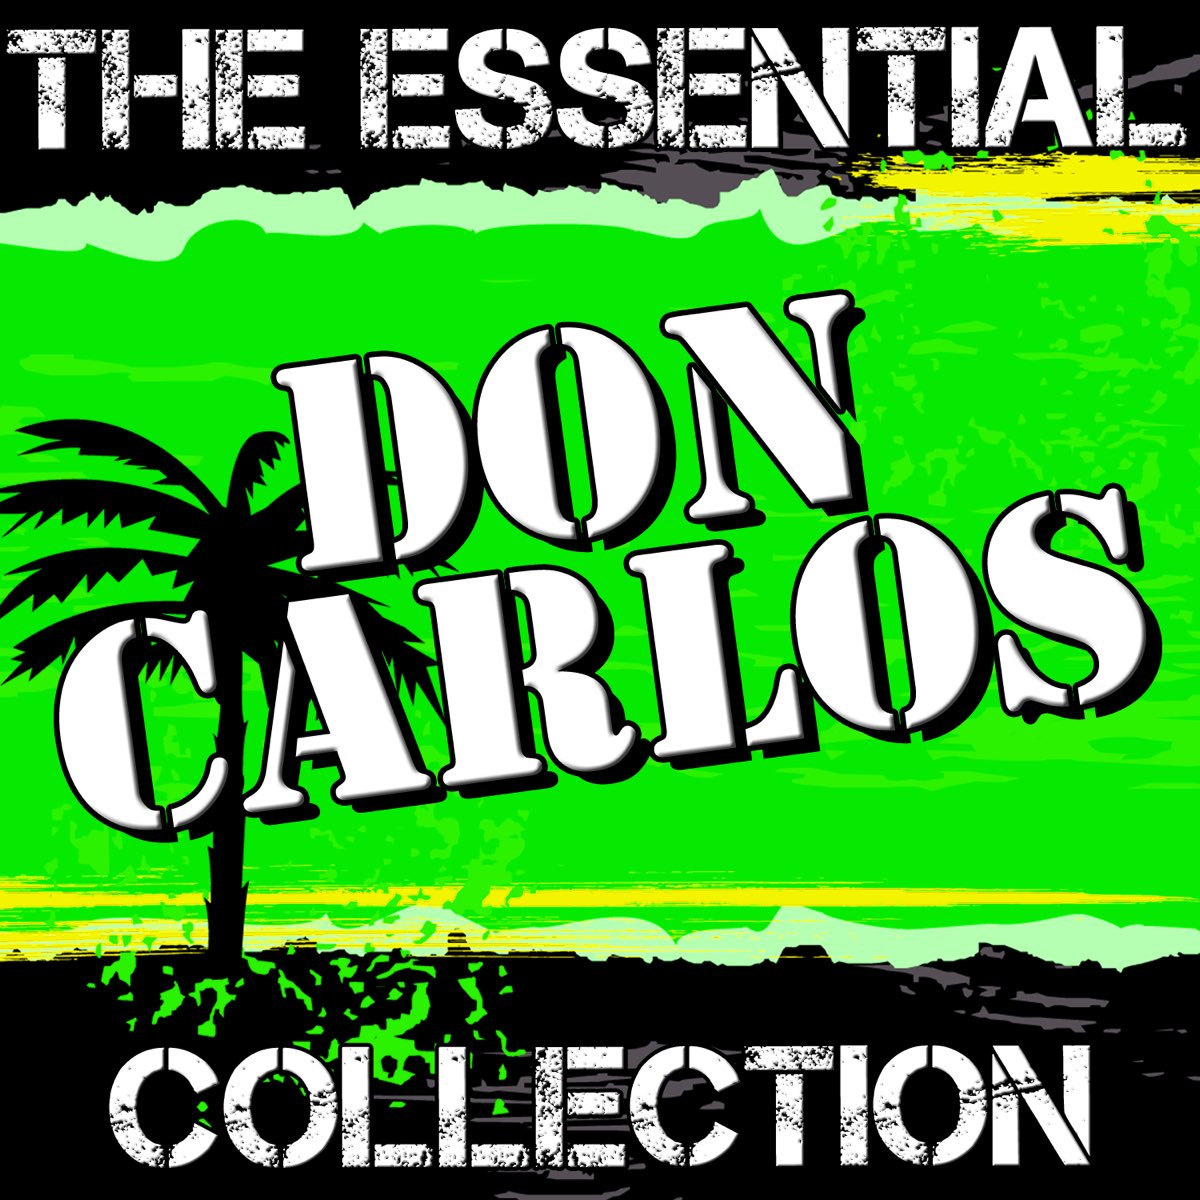 Don collection. Don Carlos Reggae. Don Carlos (musician). Дон Хаус Карлос.